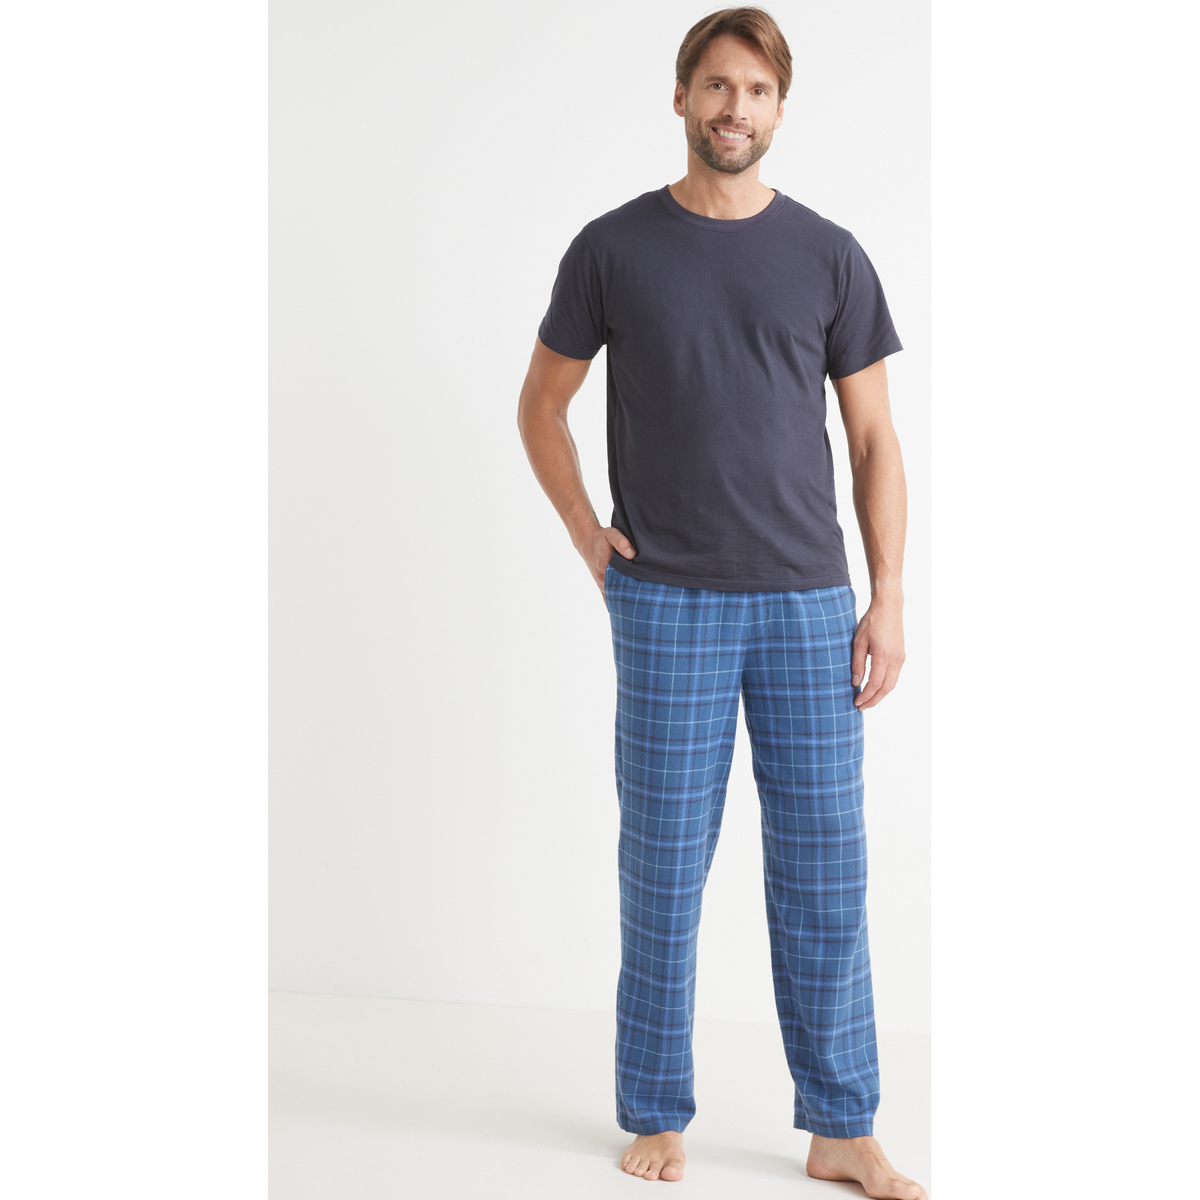 Daxon Bleu by - Pyjama homme jersey et flanelle mmAzW84